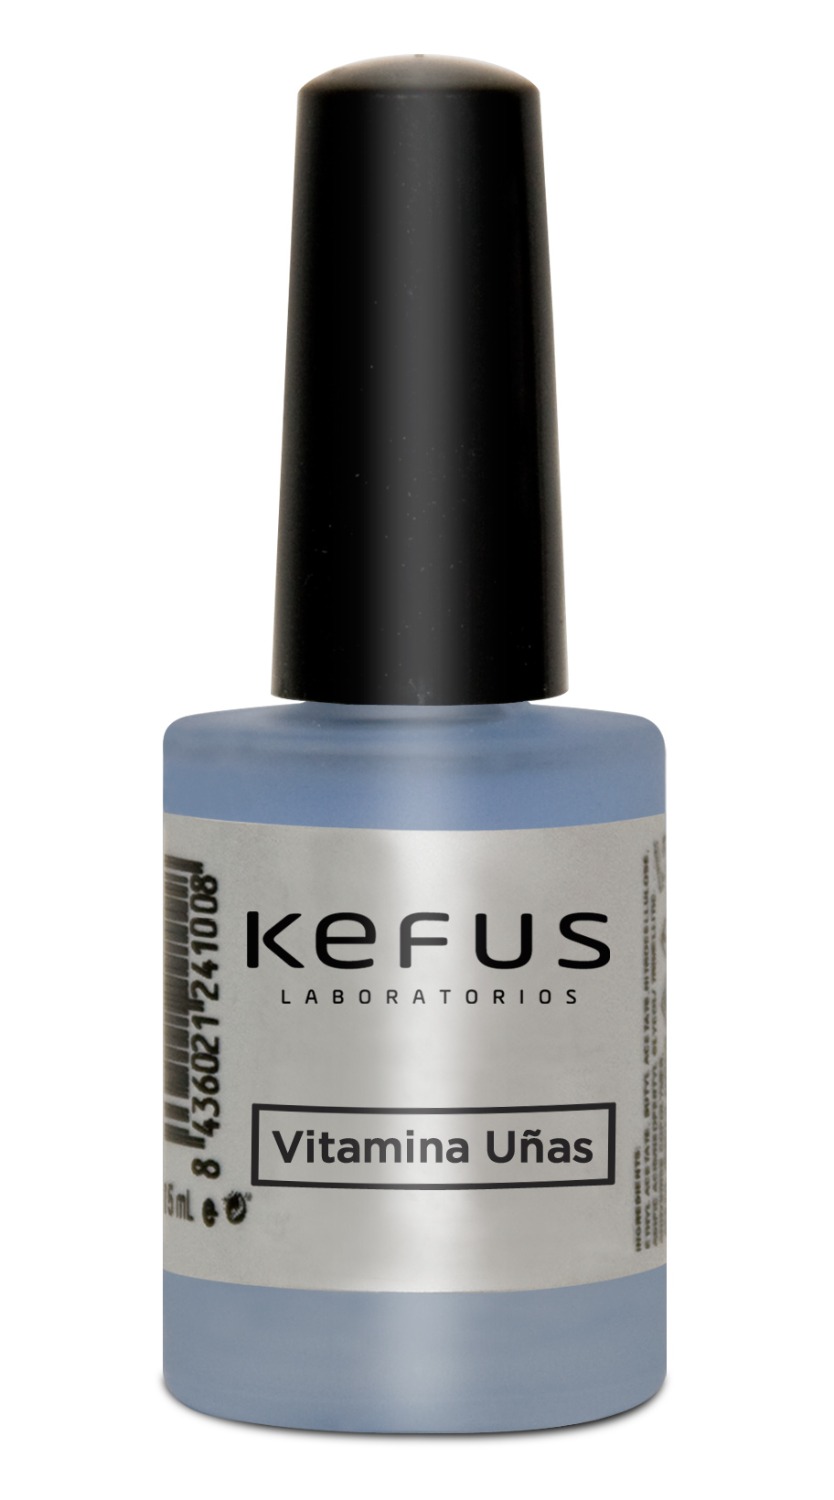 Vitamina uñas Kefus de 15 ml.